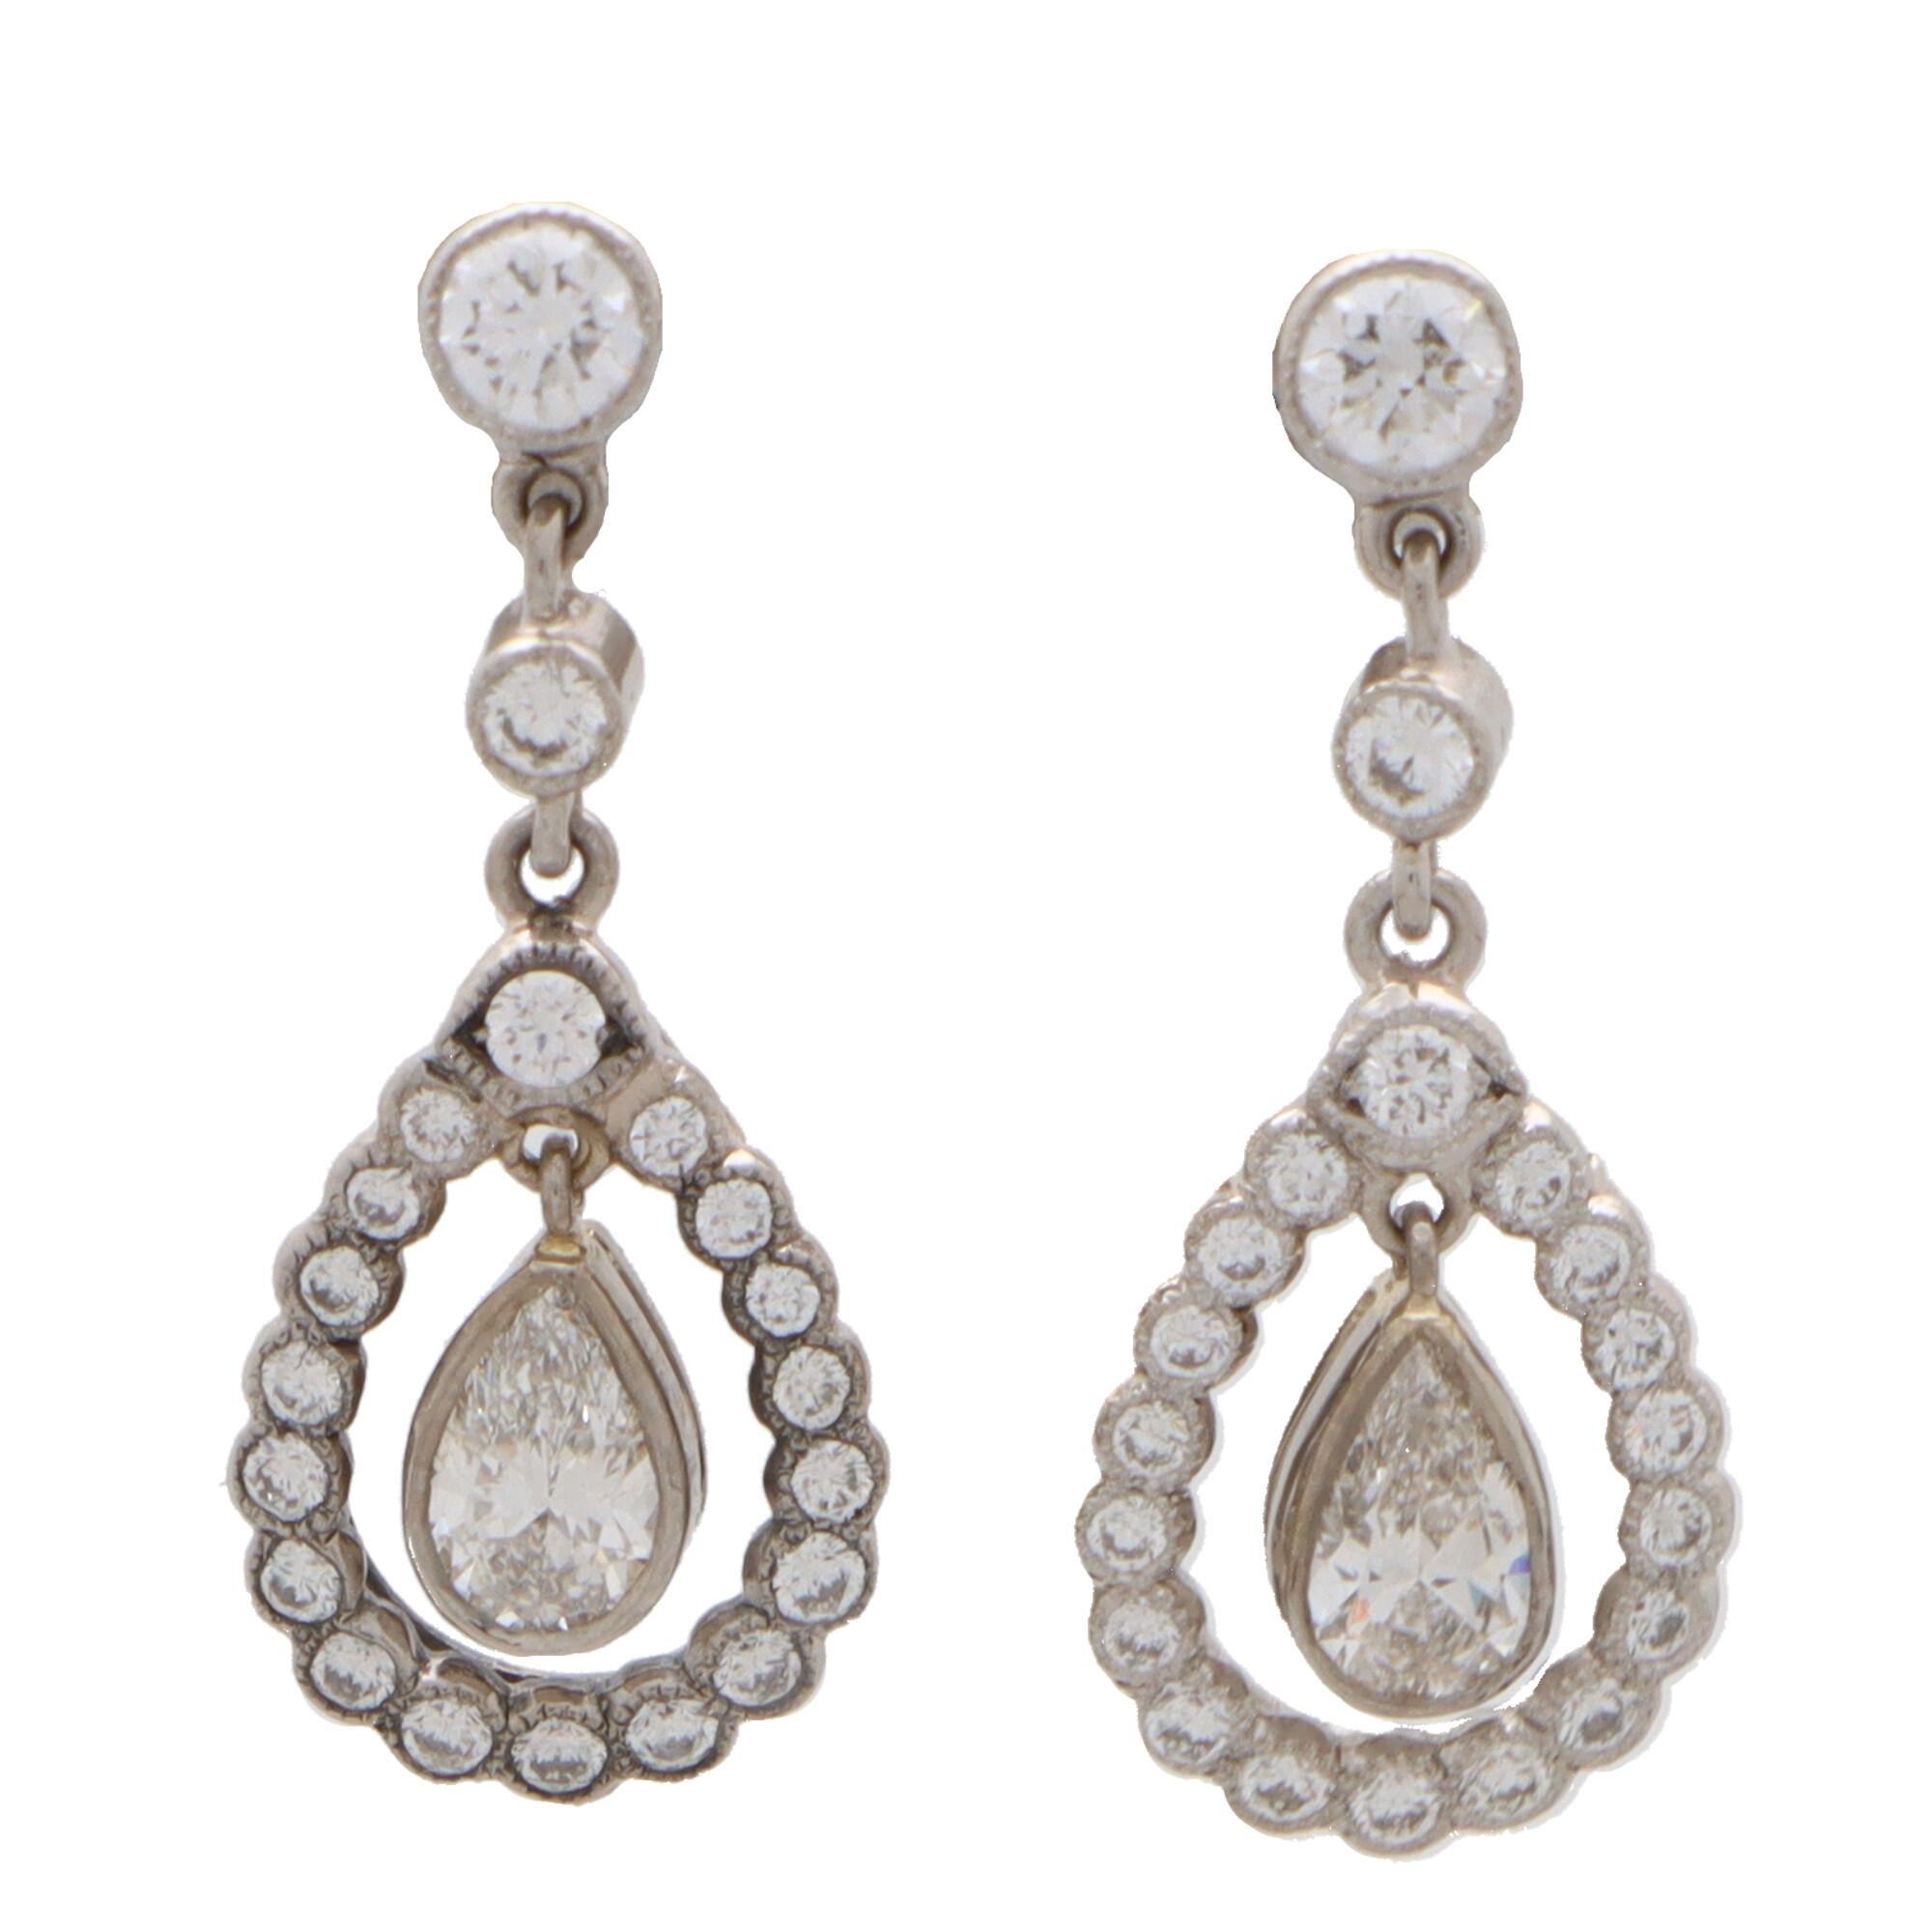 Modern Contemporary Diamond Garland Drop Earrings Set in 18k White Gold